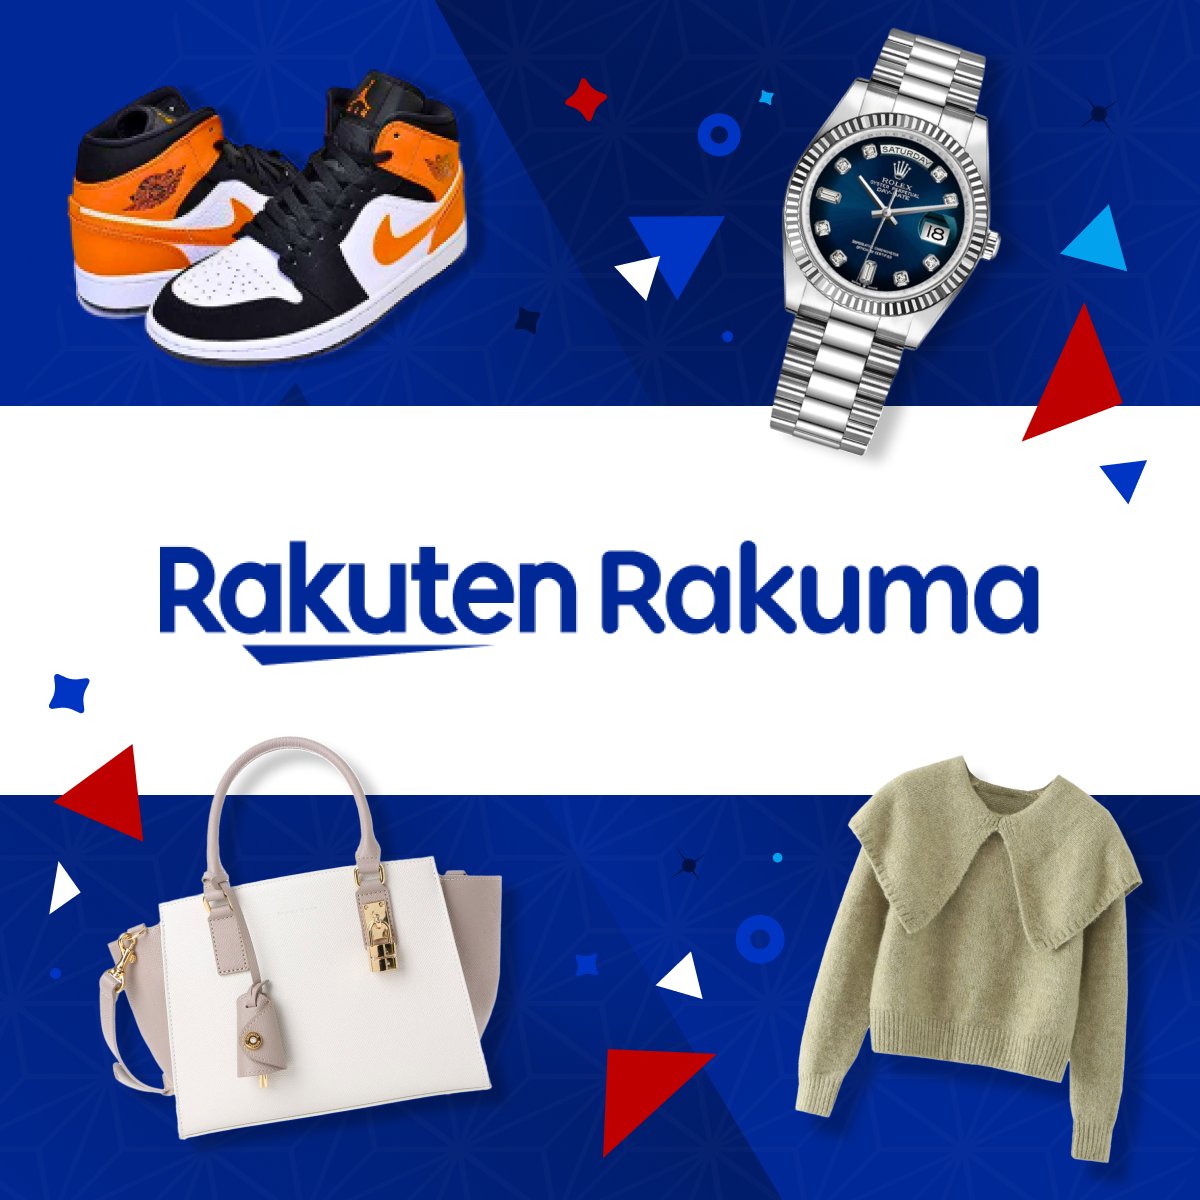 🛍️รับเงินคืน 10% ในรูปแบบแต้มสะสม ZenPoints จากสินค้าทุกชิ้น! เมื่อช้อปจาก Rakuma
🛍️ได้คืนสูงสุดถึง 50,000 เยน/ชิ้น
⏬ช้อปจาก RAKUMA เลย⏬
🔗i.mtr.cool/emjbczczpn
🗓️27 พ.ค. 2024 16:00 - 31 พ.ค. 2024 16:00 (เวลาญี่ปุ่น)
#zenmarket #Rakuma #สินค้าญี่ปุ่น #ส่วนลด #rakuten